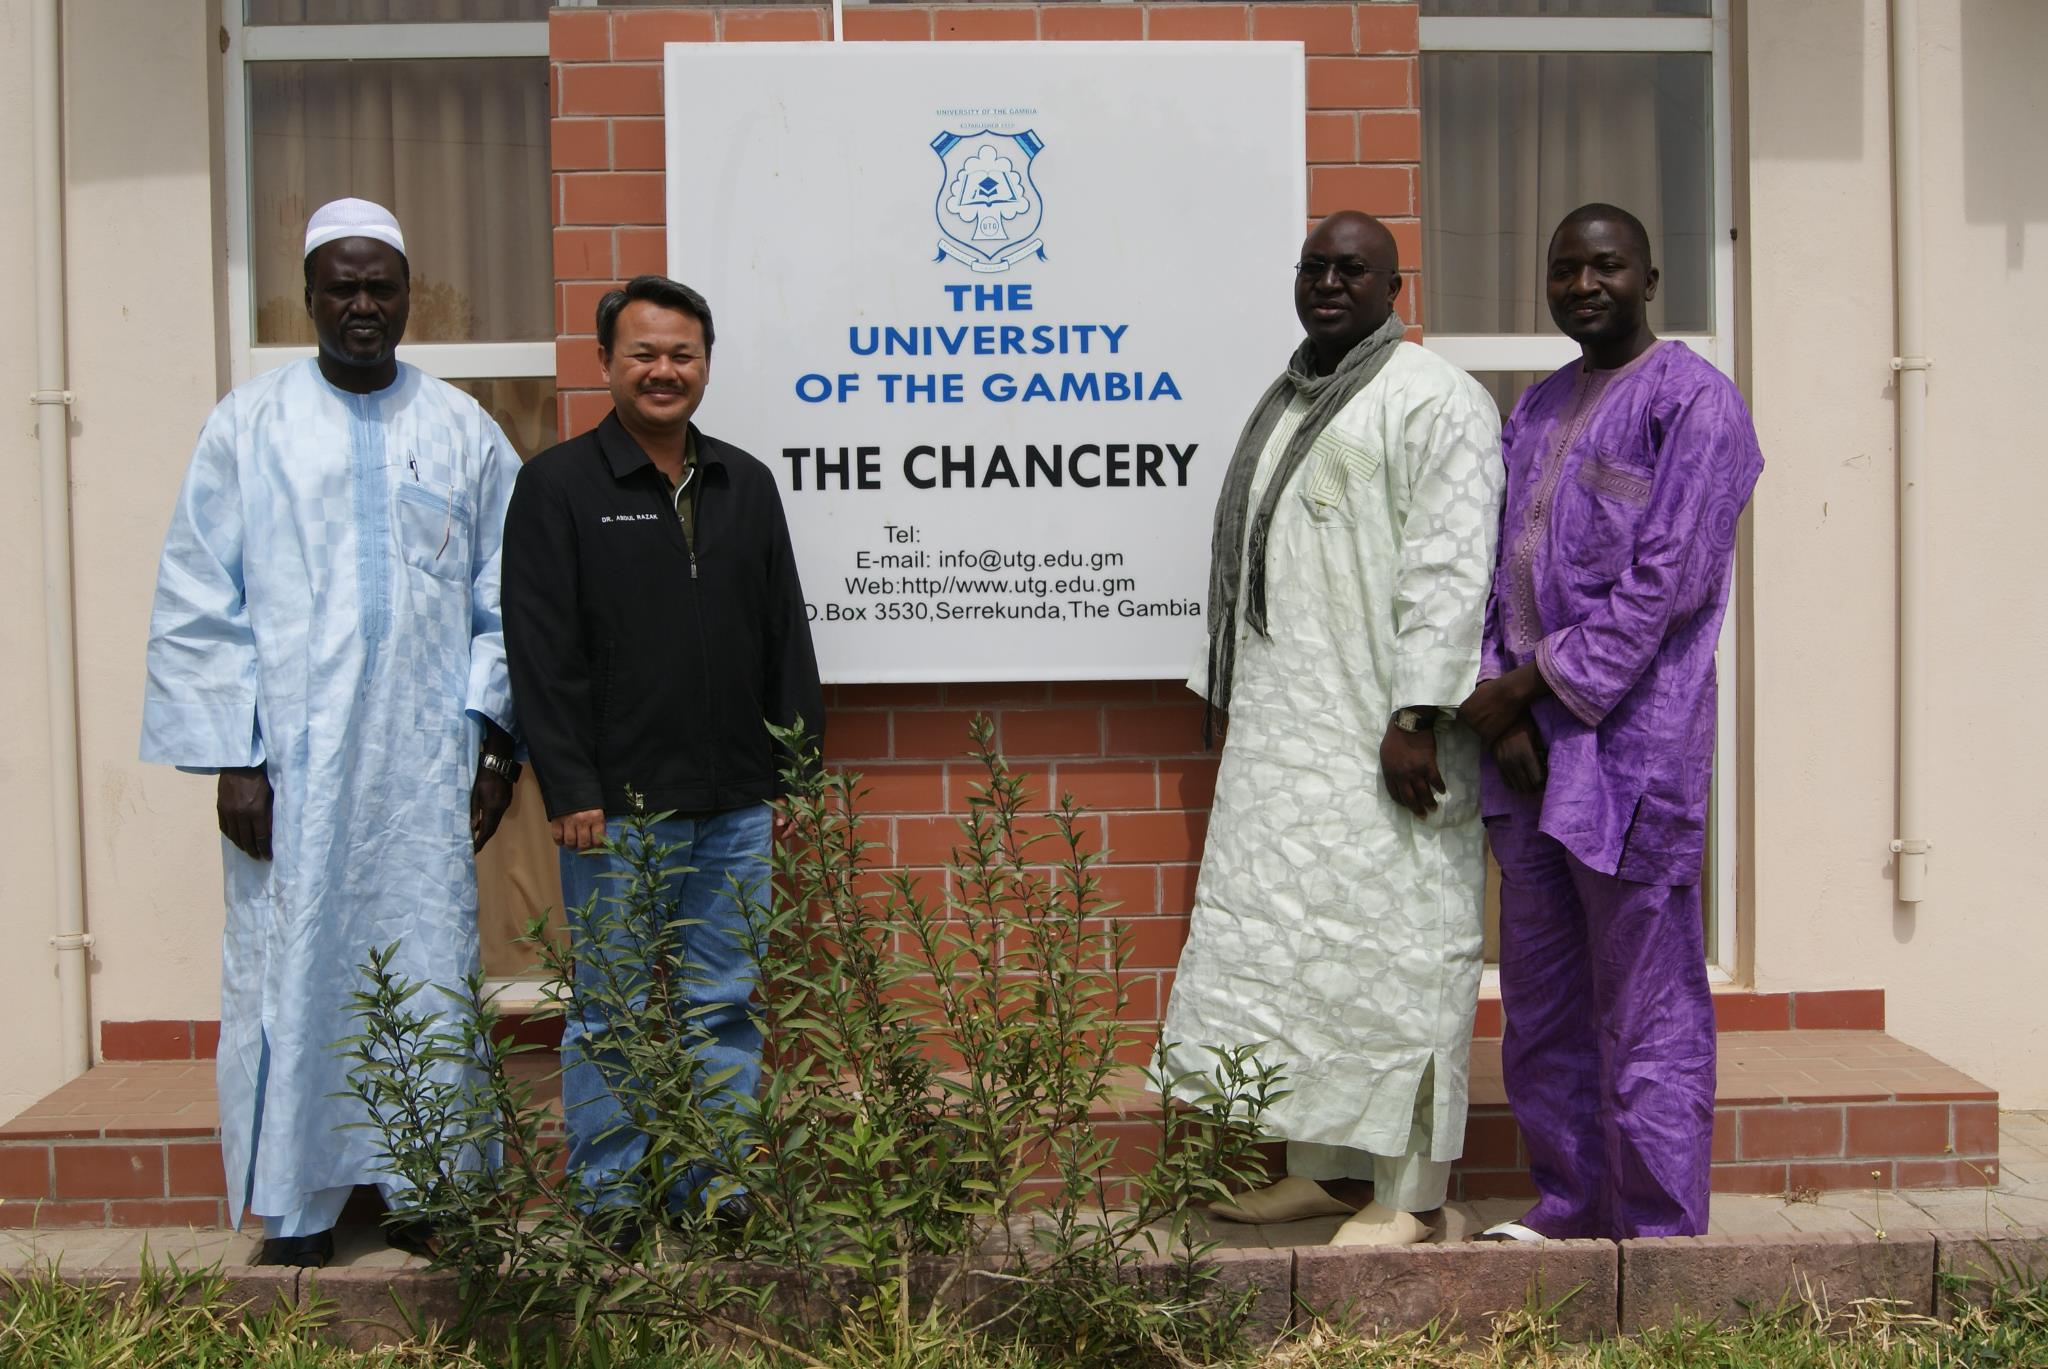 FB - Abdul Razak Sapian 12.2.2012 (Photo with the Univ of the Gambia VC and alumni)